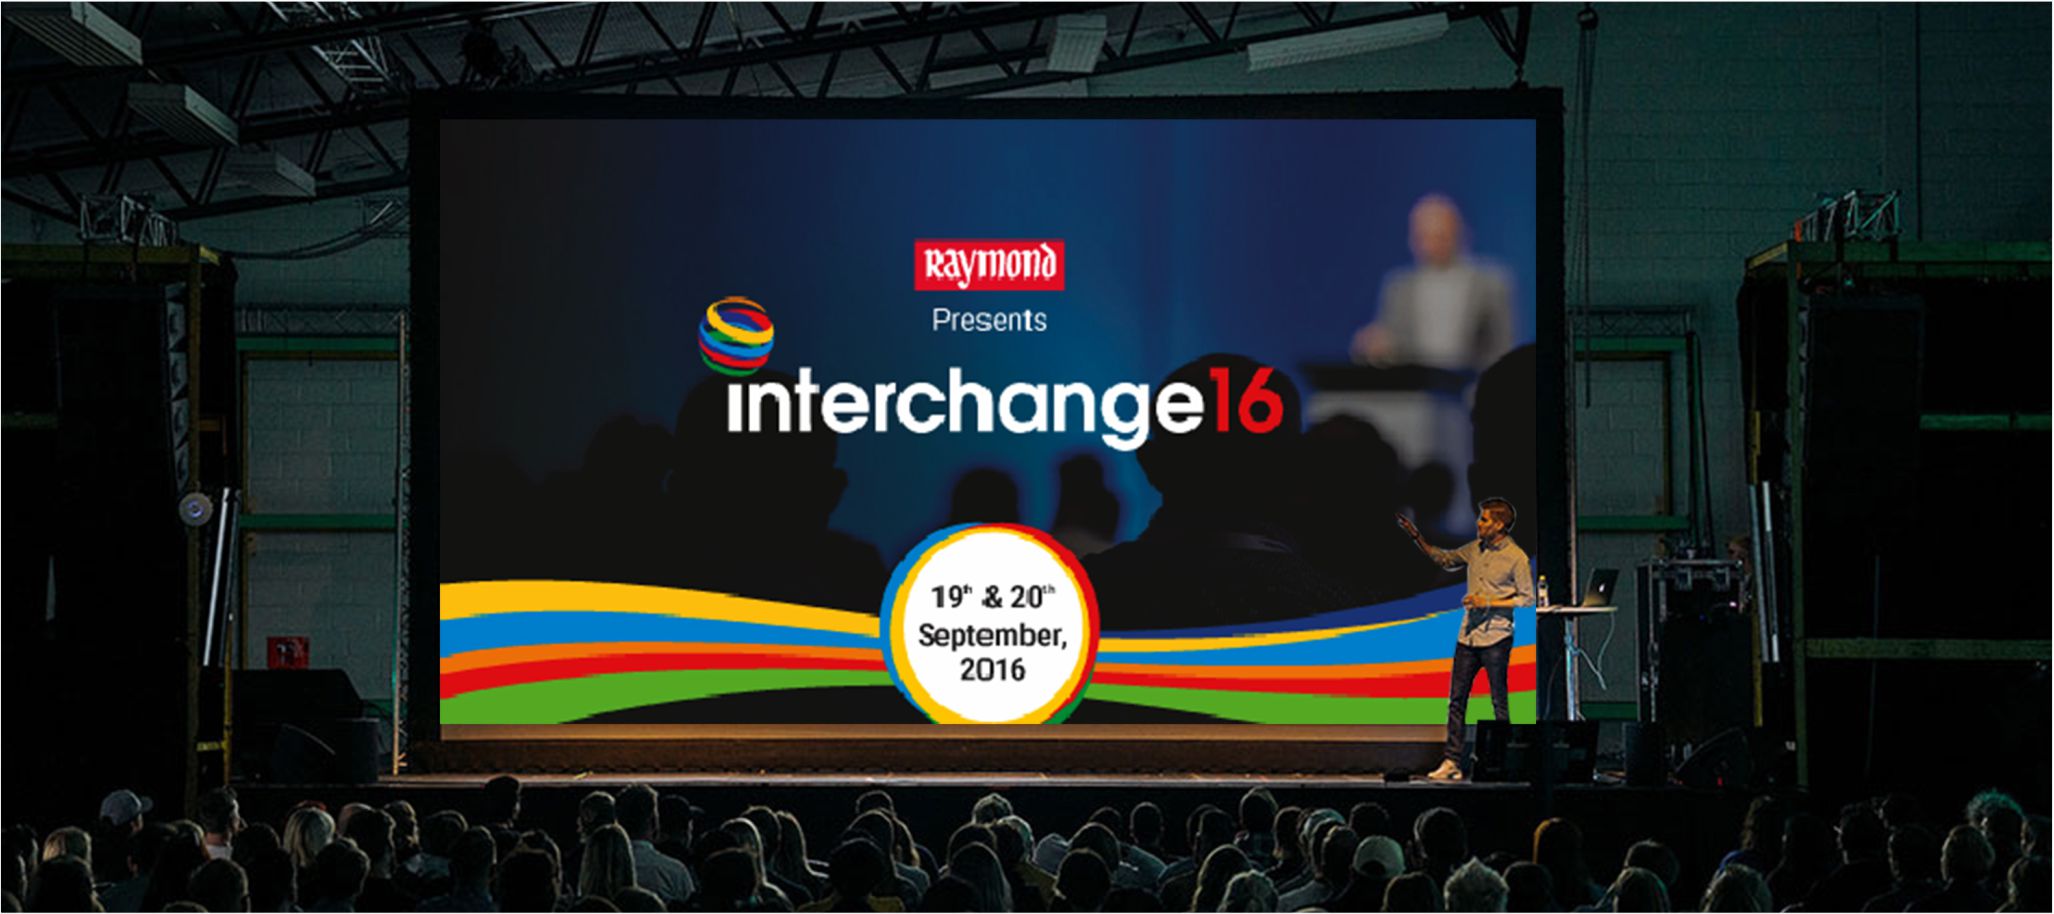 Raymond Interchange 16 Invitation design for event